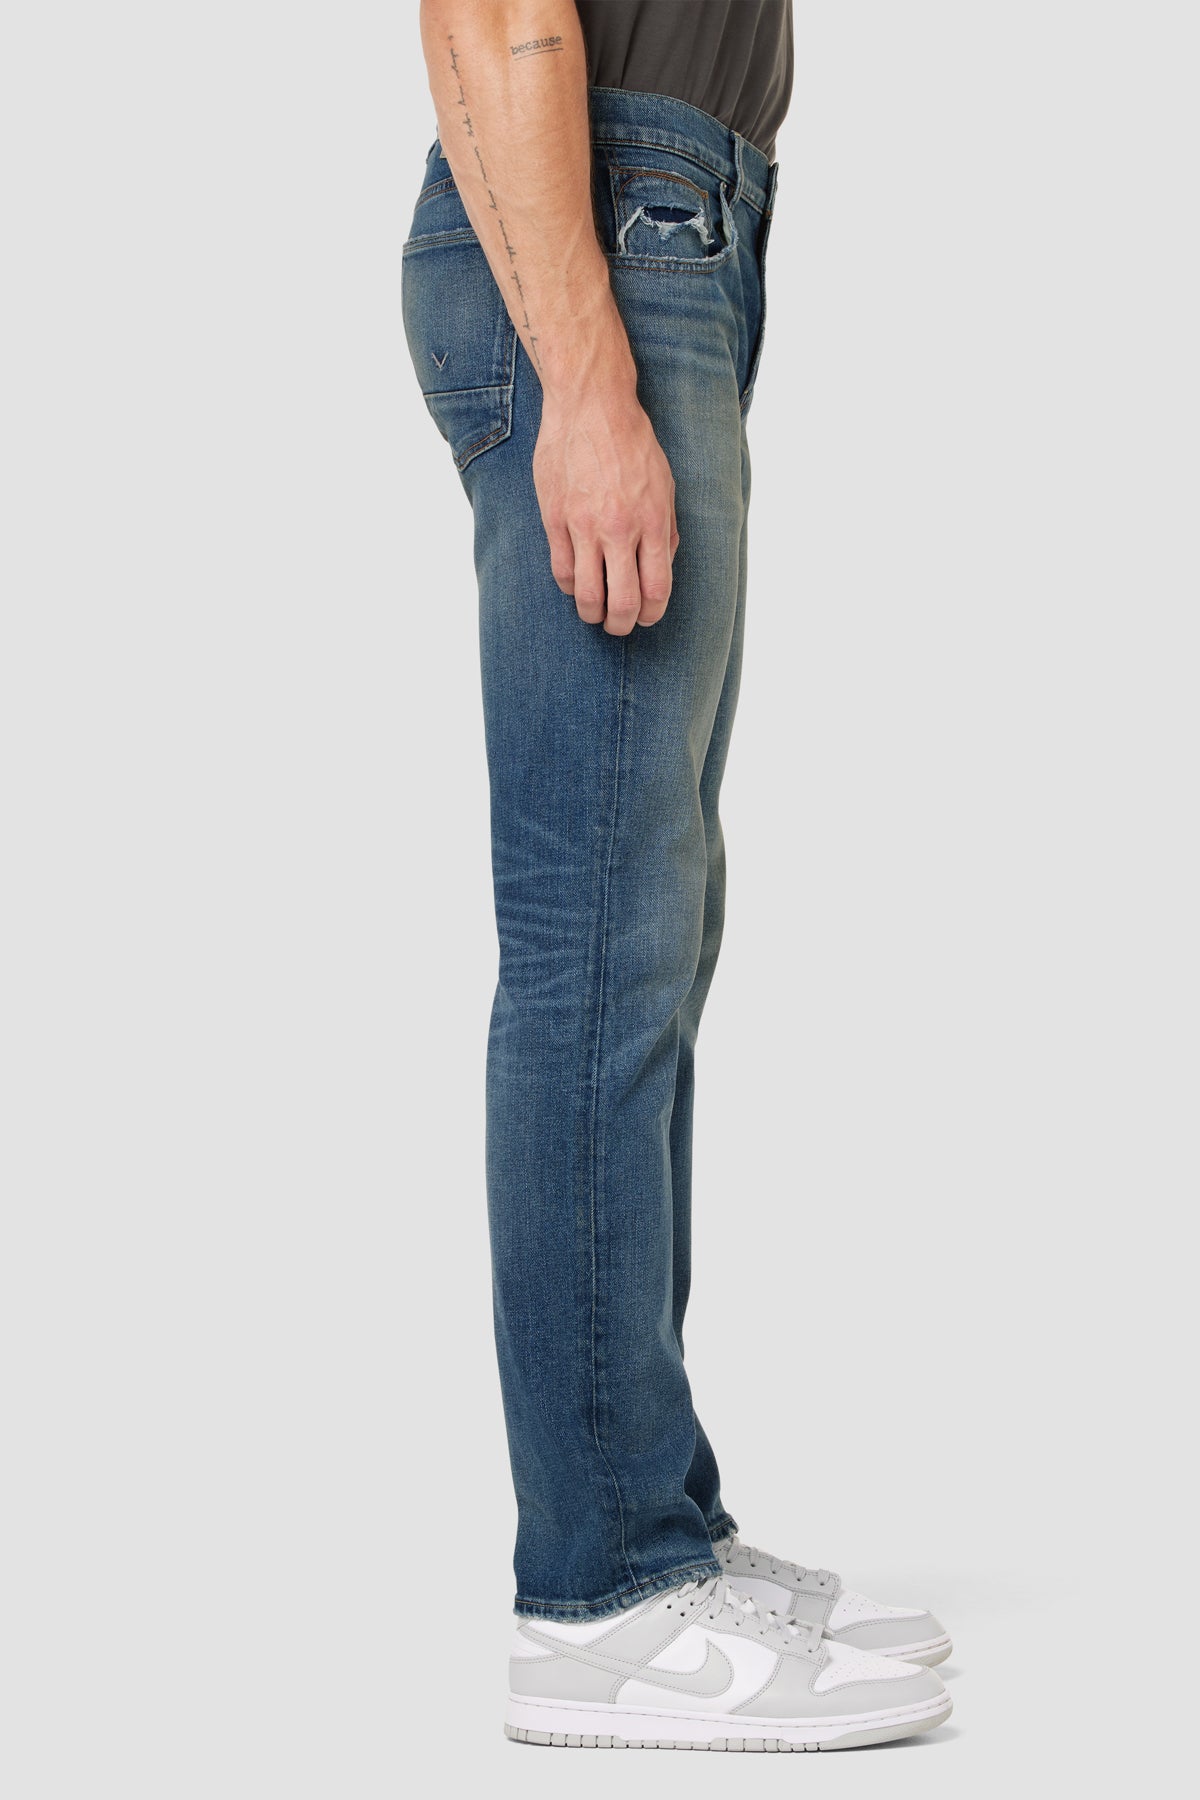 Blake Slim Straight Jean | Hudson Jeans Fabric Italian Premium 